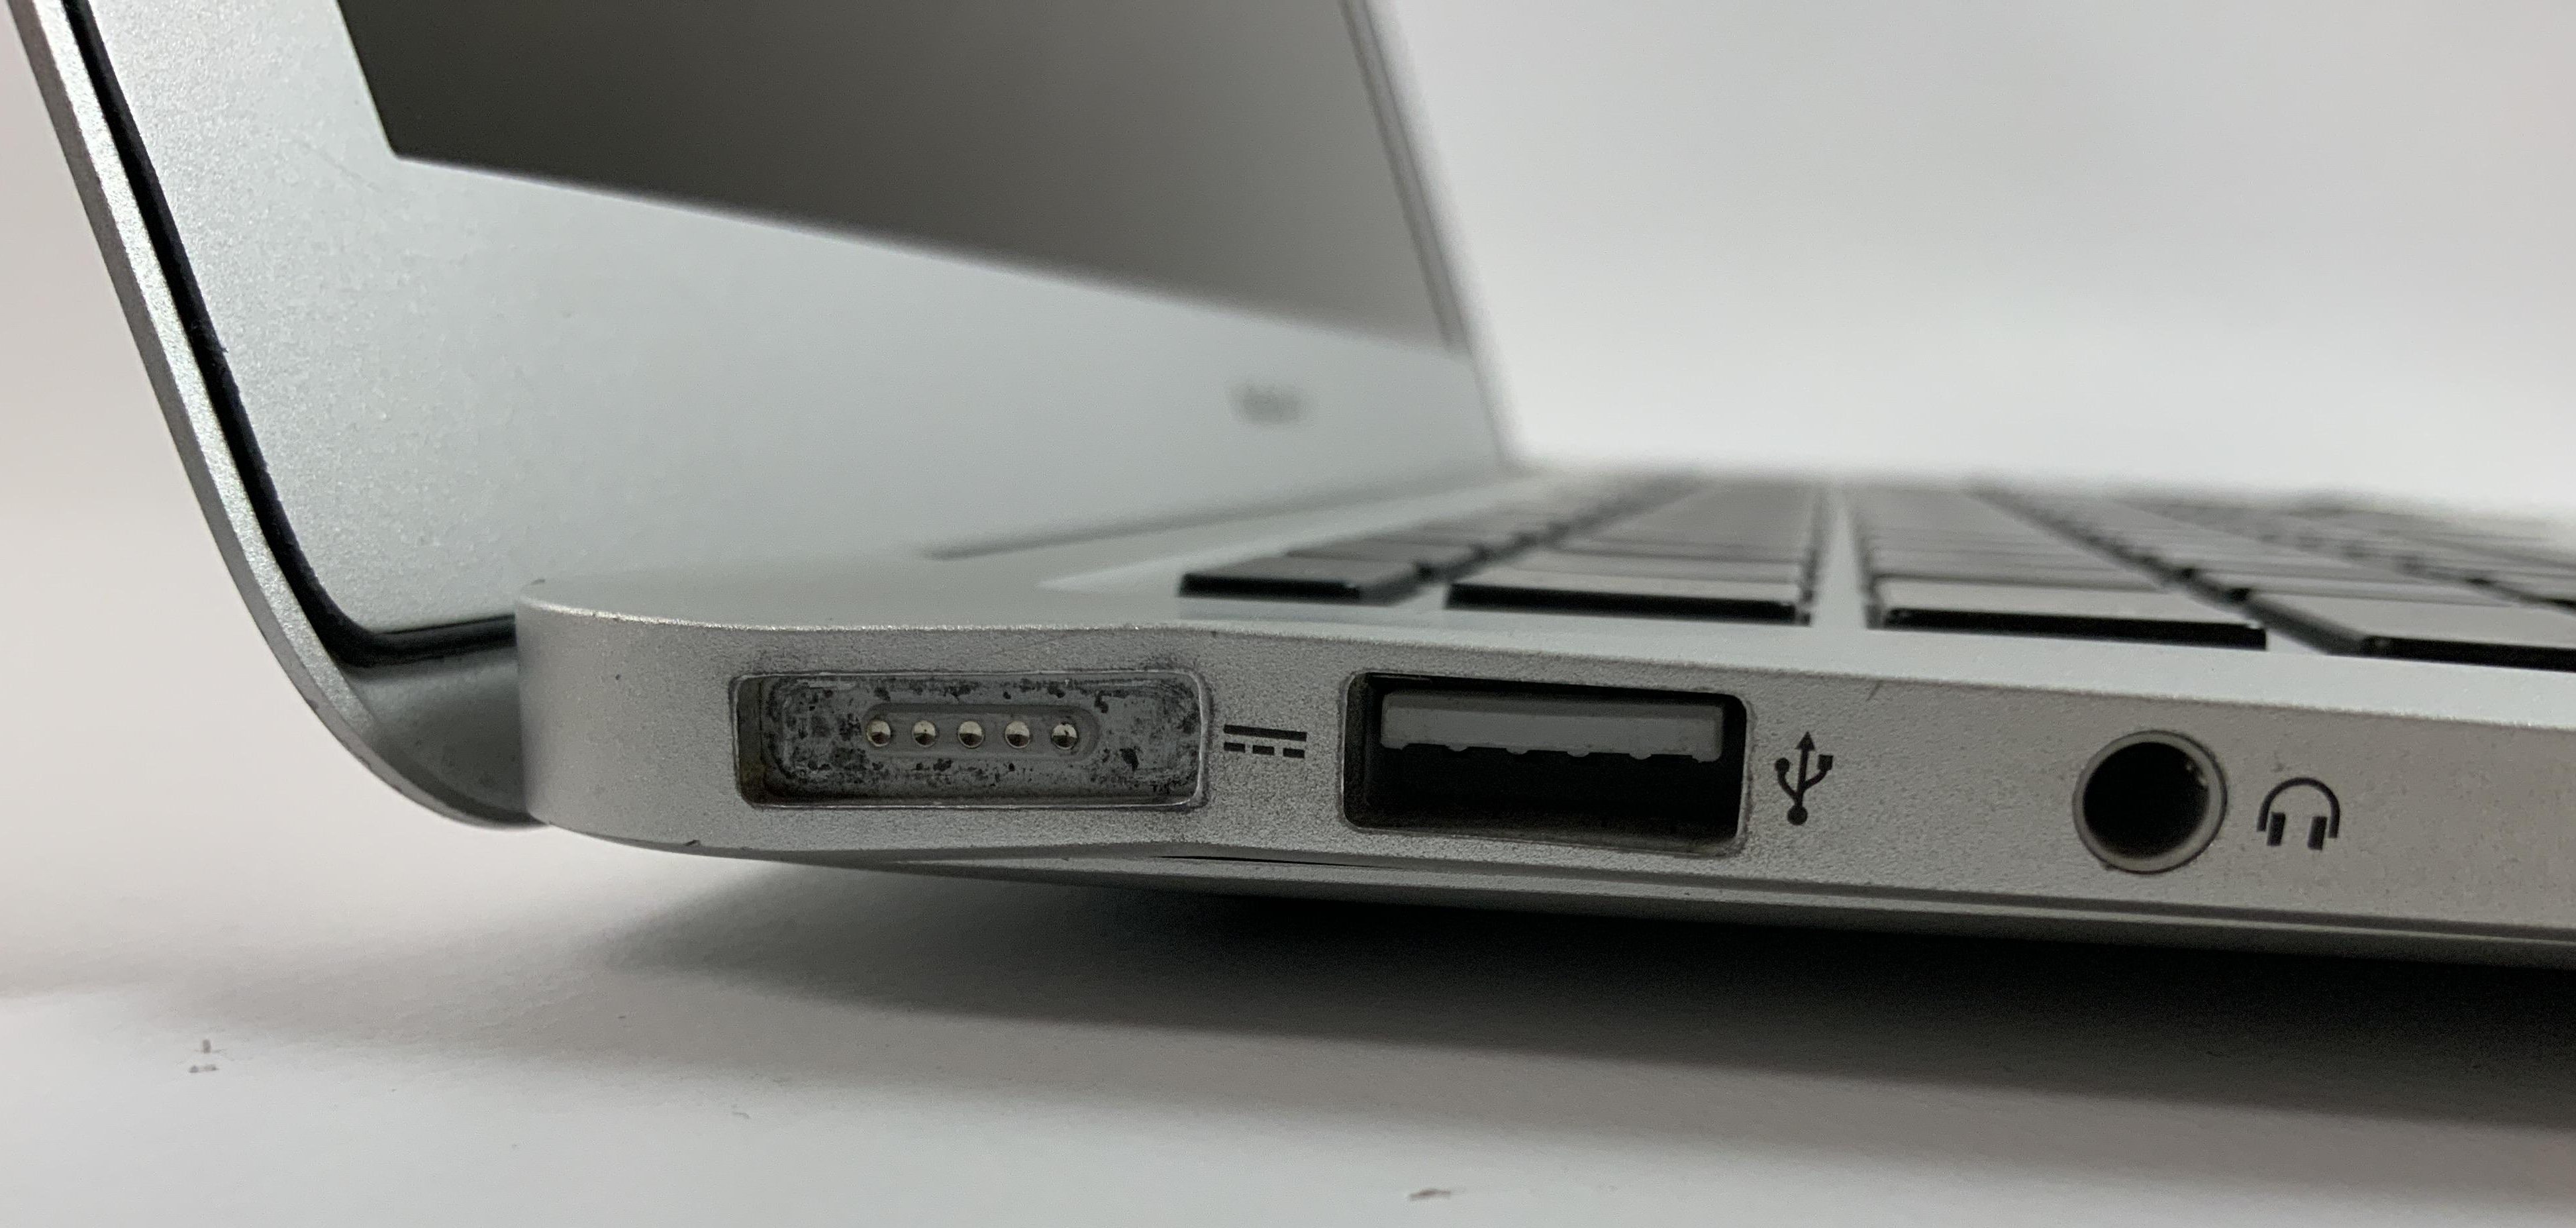 MacBook Air 13" Early 2015 (Intel Core i5 1.6 GHz 4 GB RAM 128 GB SSD), Intel Core i5 1.6 GHz, 4 GB RAM, 128 GB SSD, Kuva 2